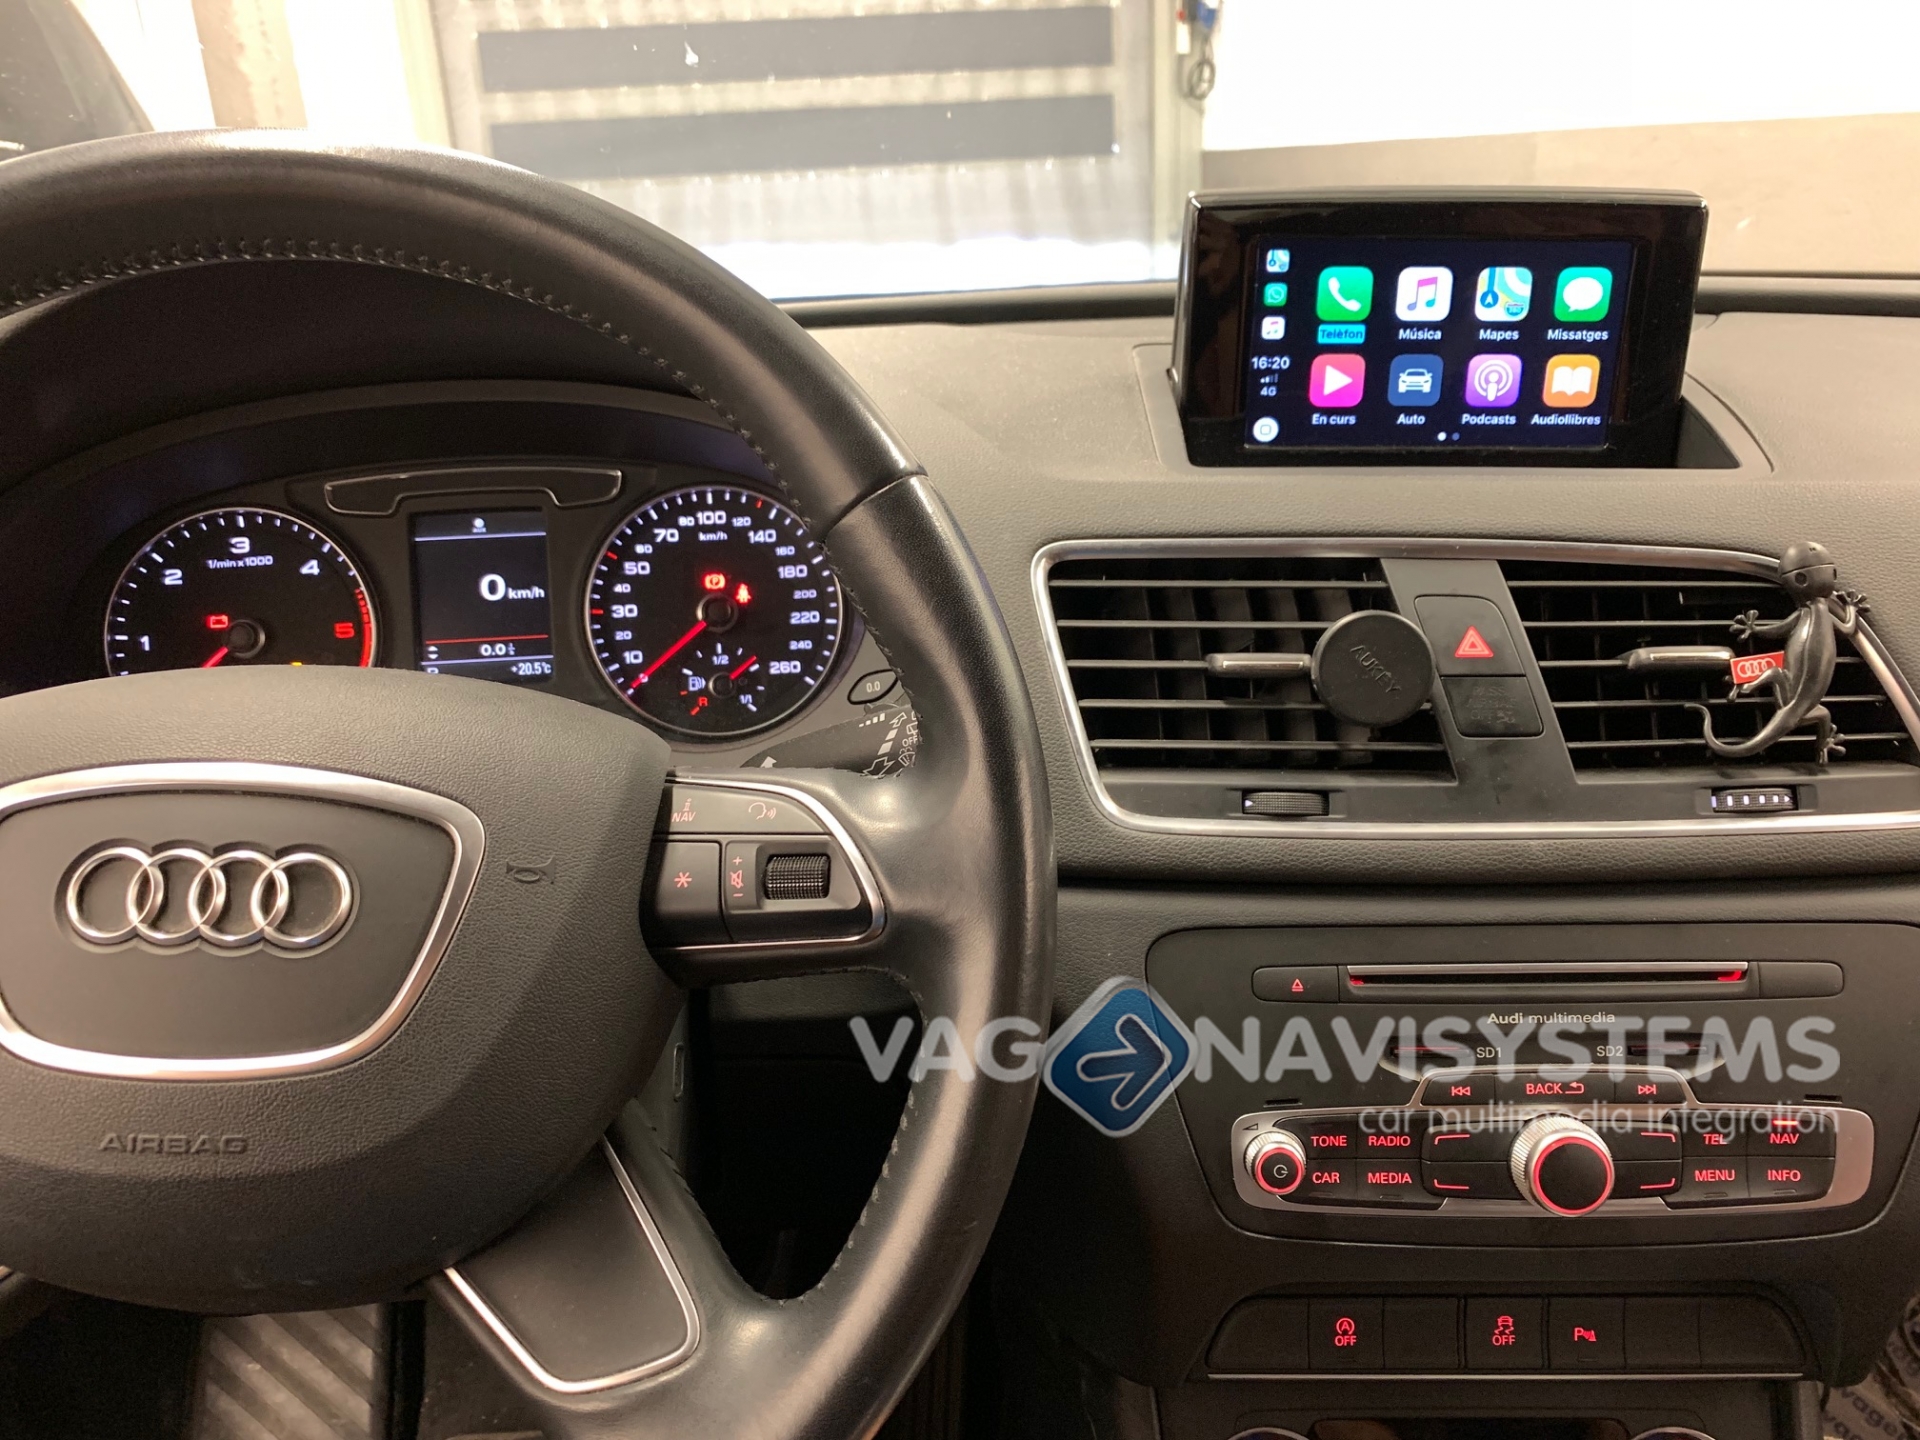 Audi A1 / Q3 MMI 2G (6,5”) Interface Carplay inalambrico / Android Auto